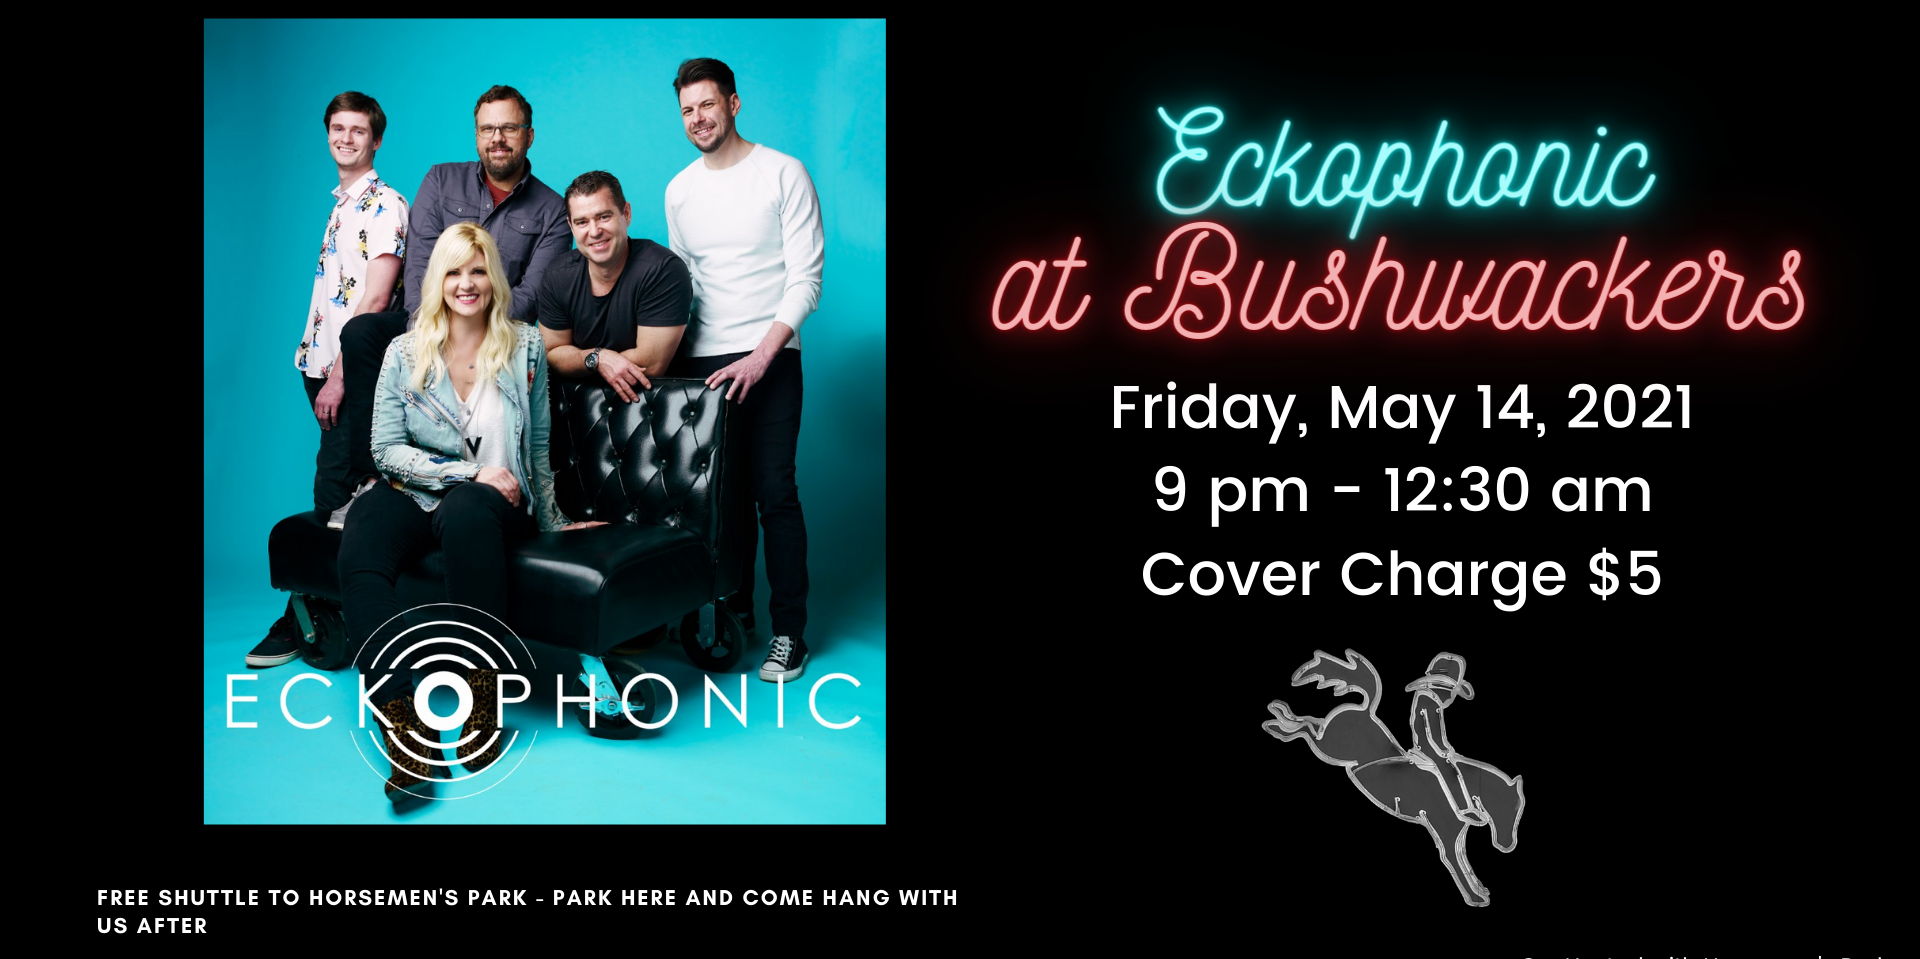 Eckophonic at Bushwackers! promotional image